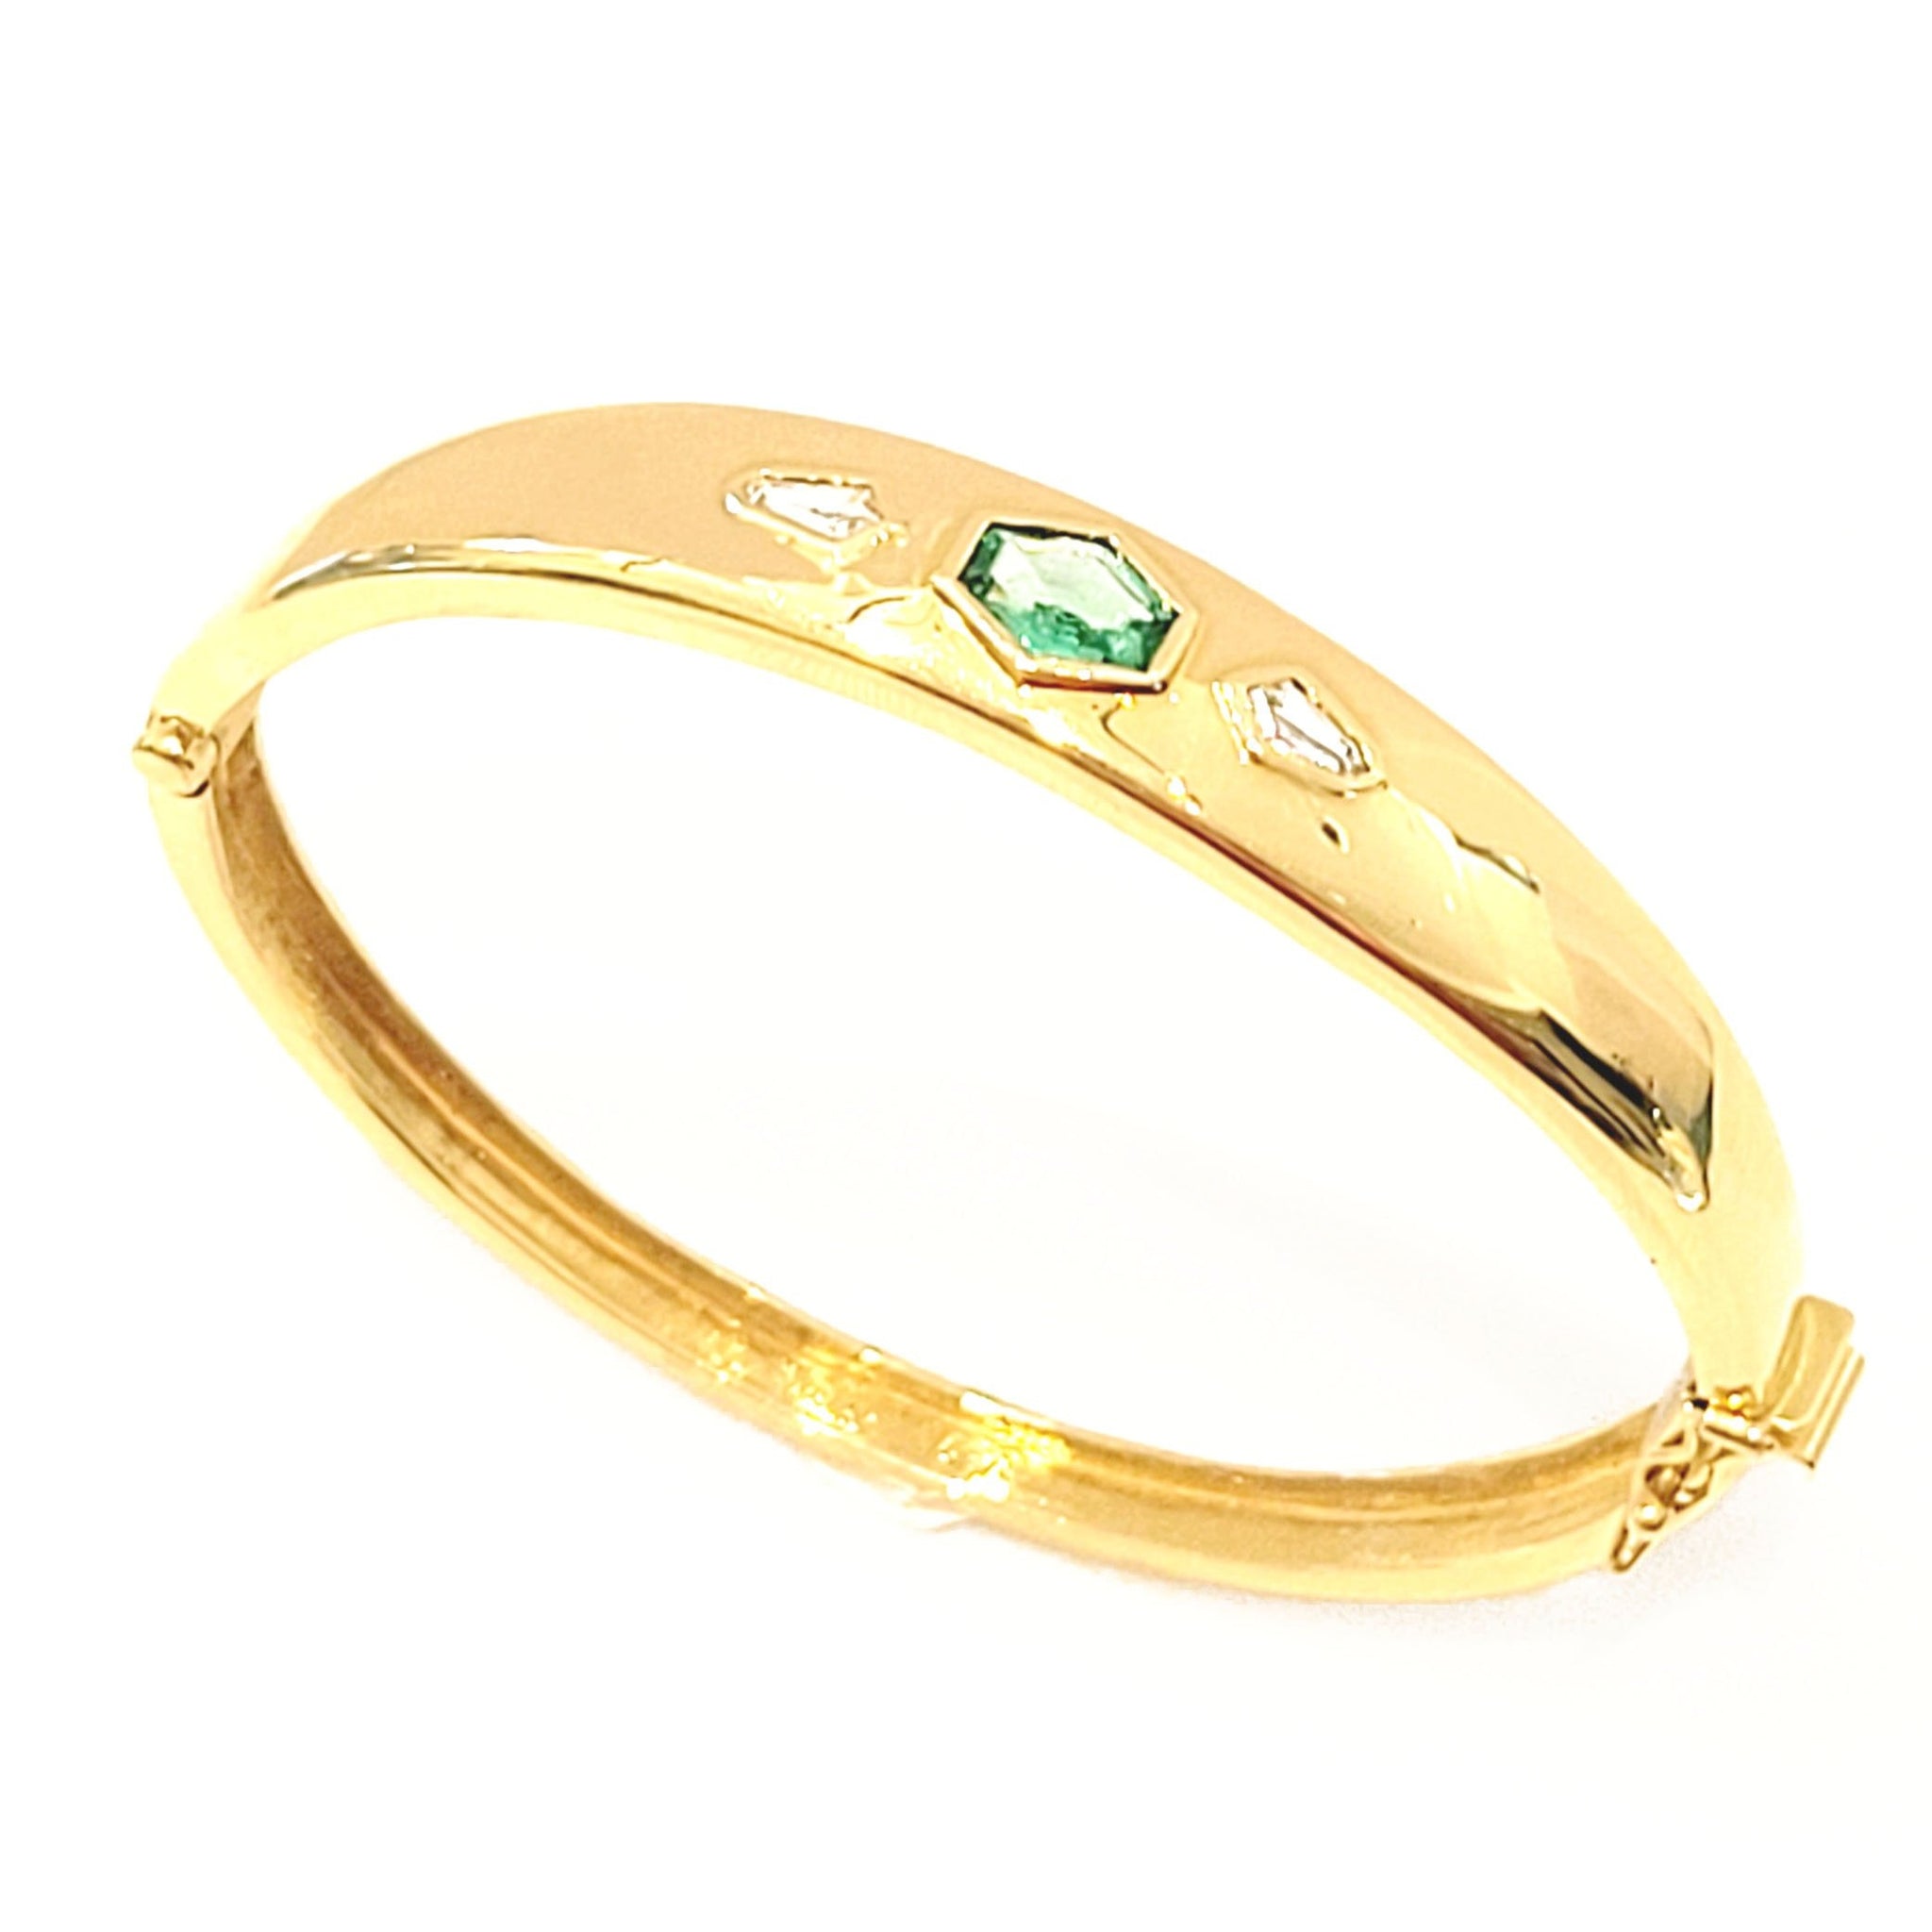 One of a Kind Emerald and Diamond Bracelet